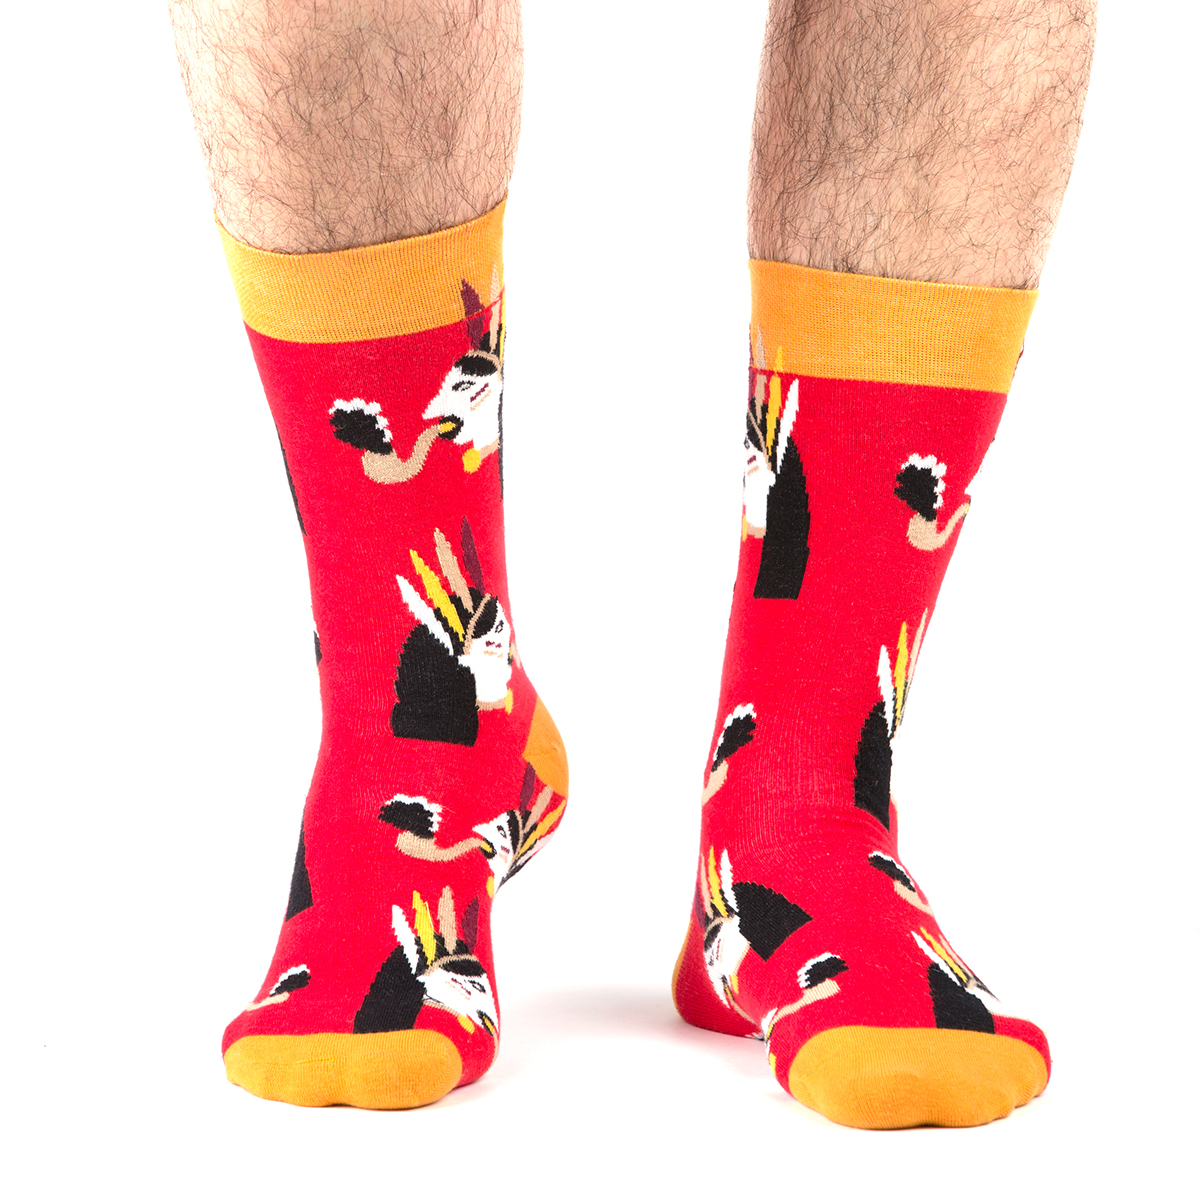 London sockmate brand design graphics socks cachetejack Shopping walk sport pretaporter Character indian red yellow